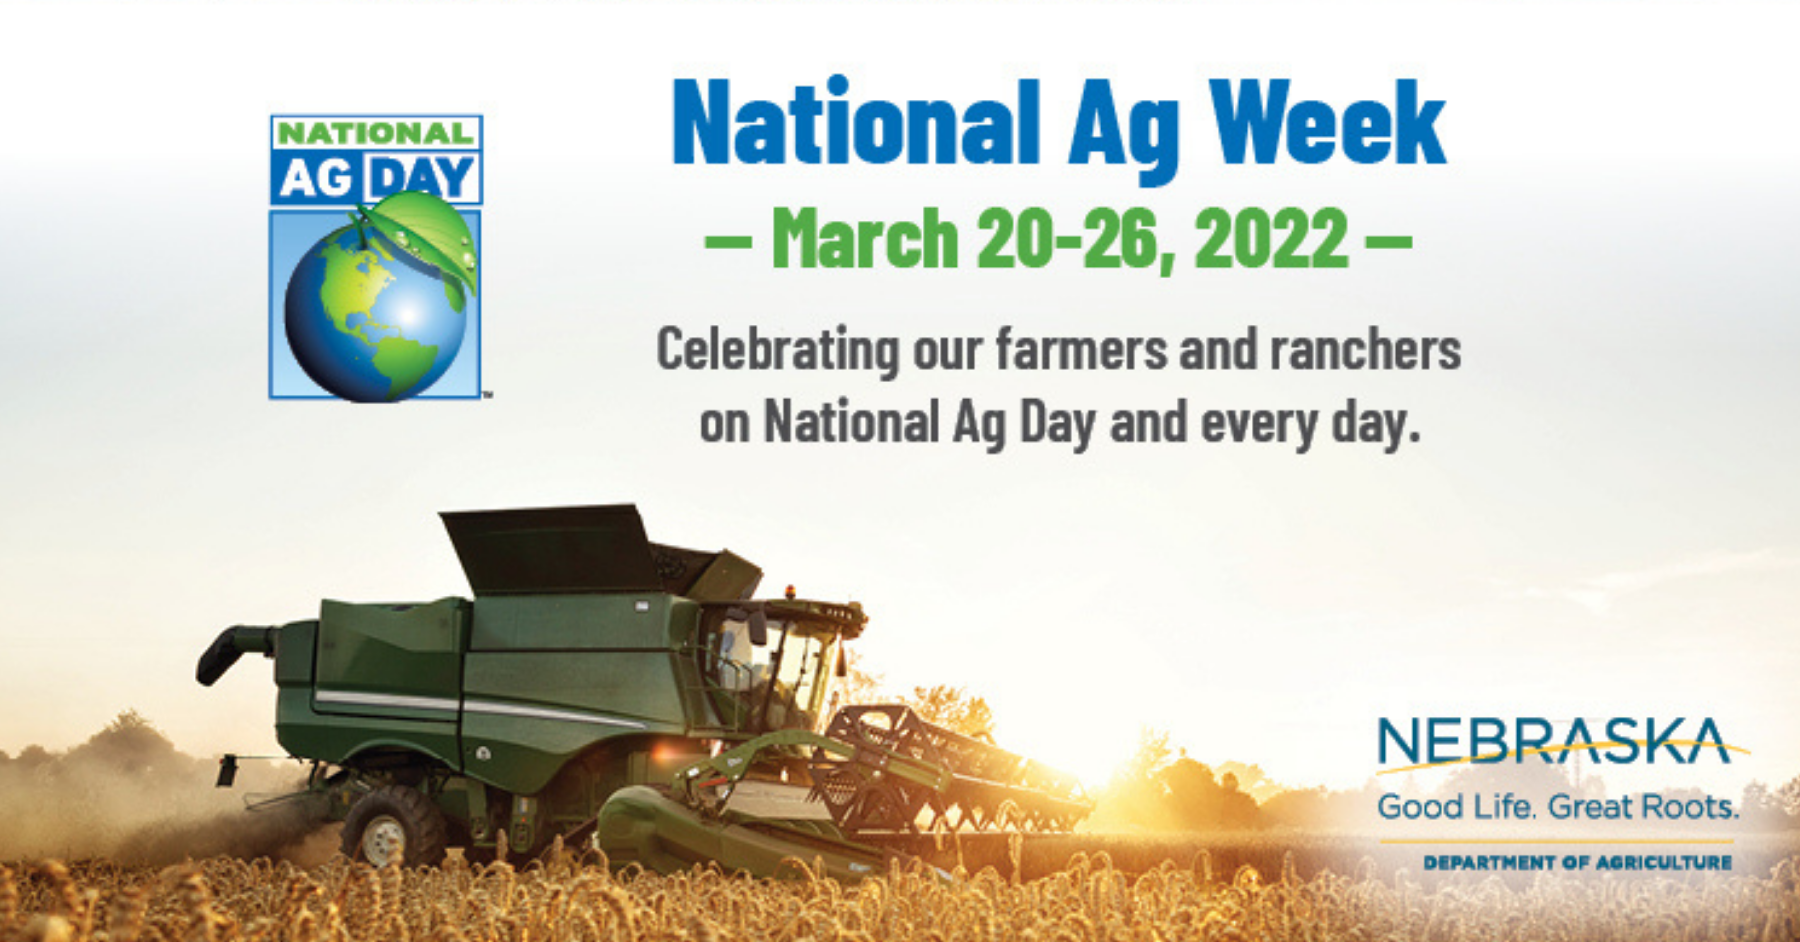 Celebrate Nebraska Agriculture During National Ag Week Bio Nebraska